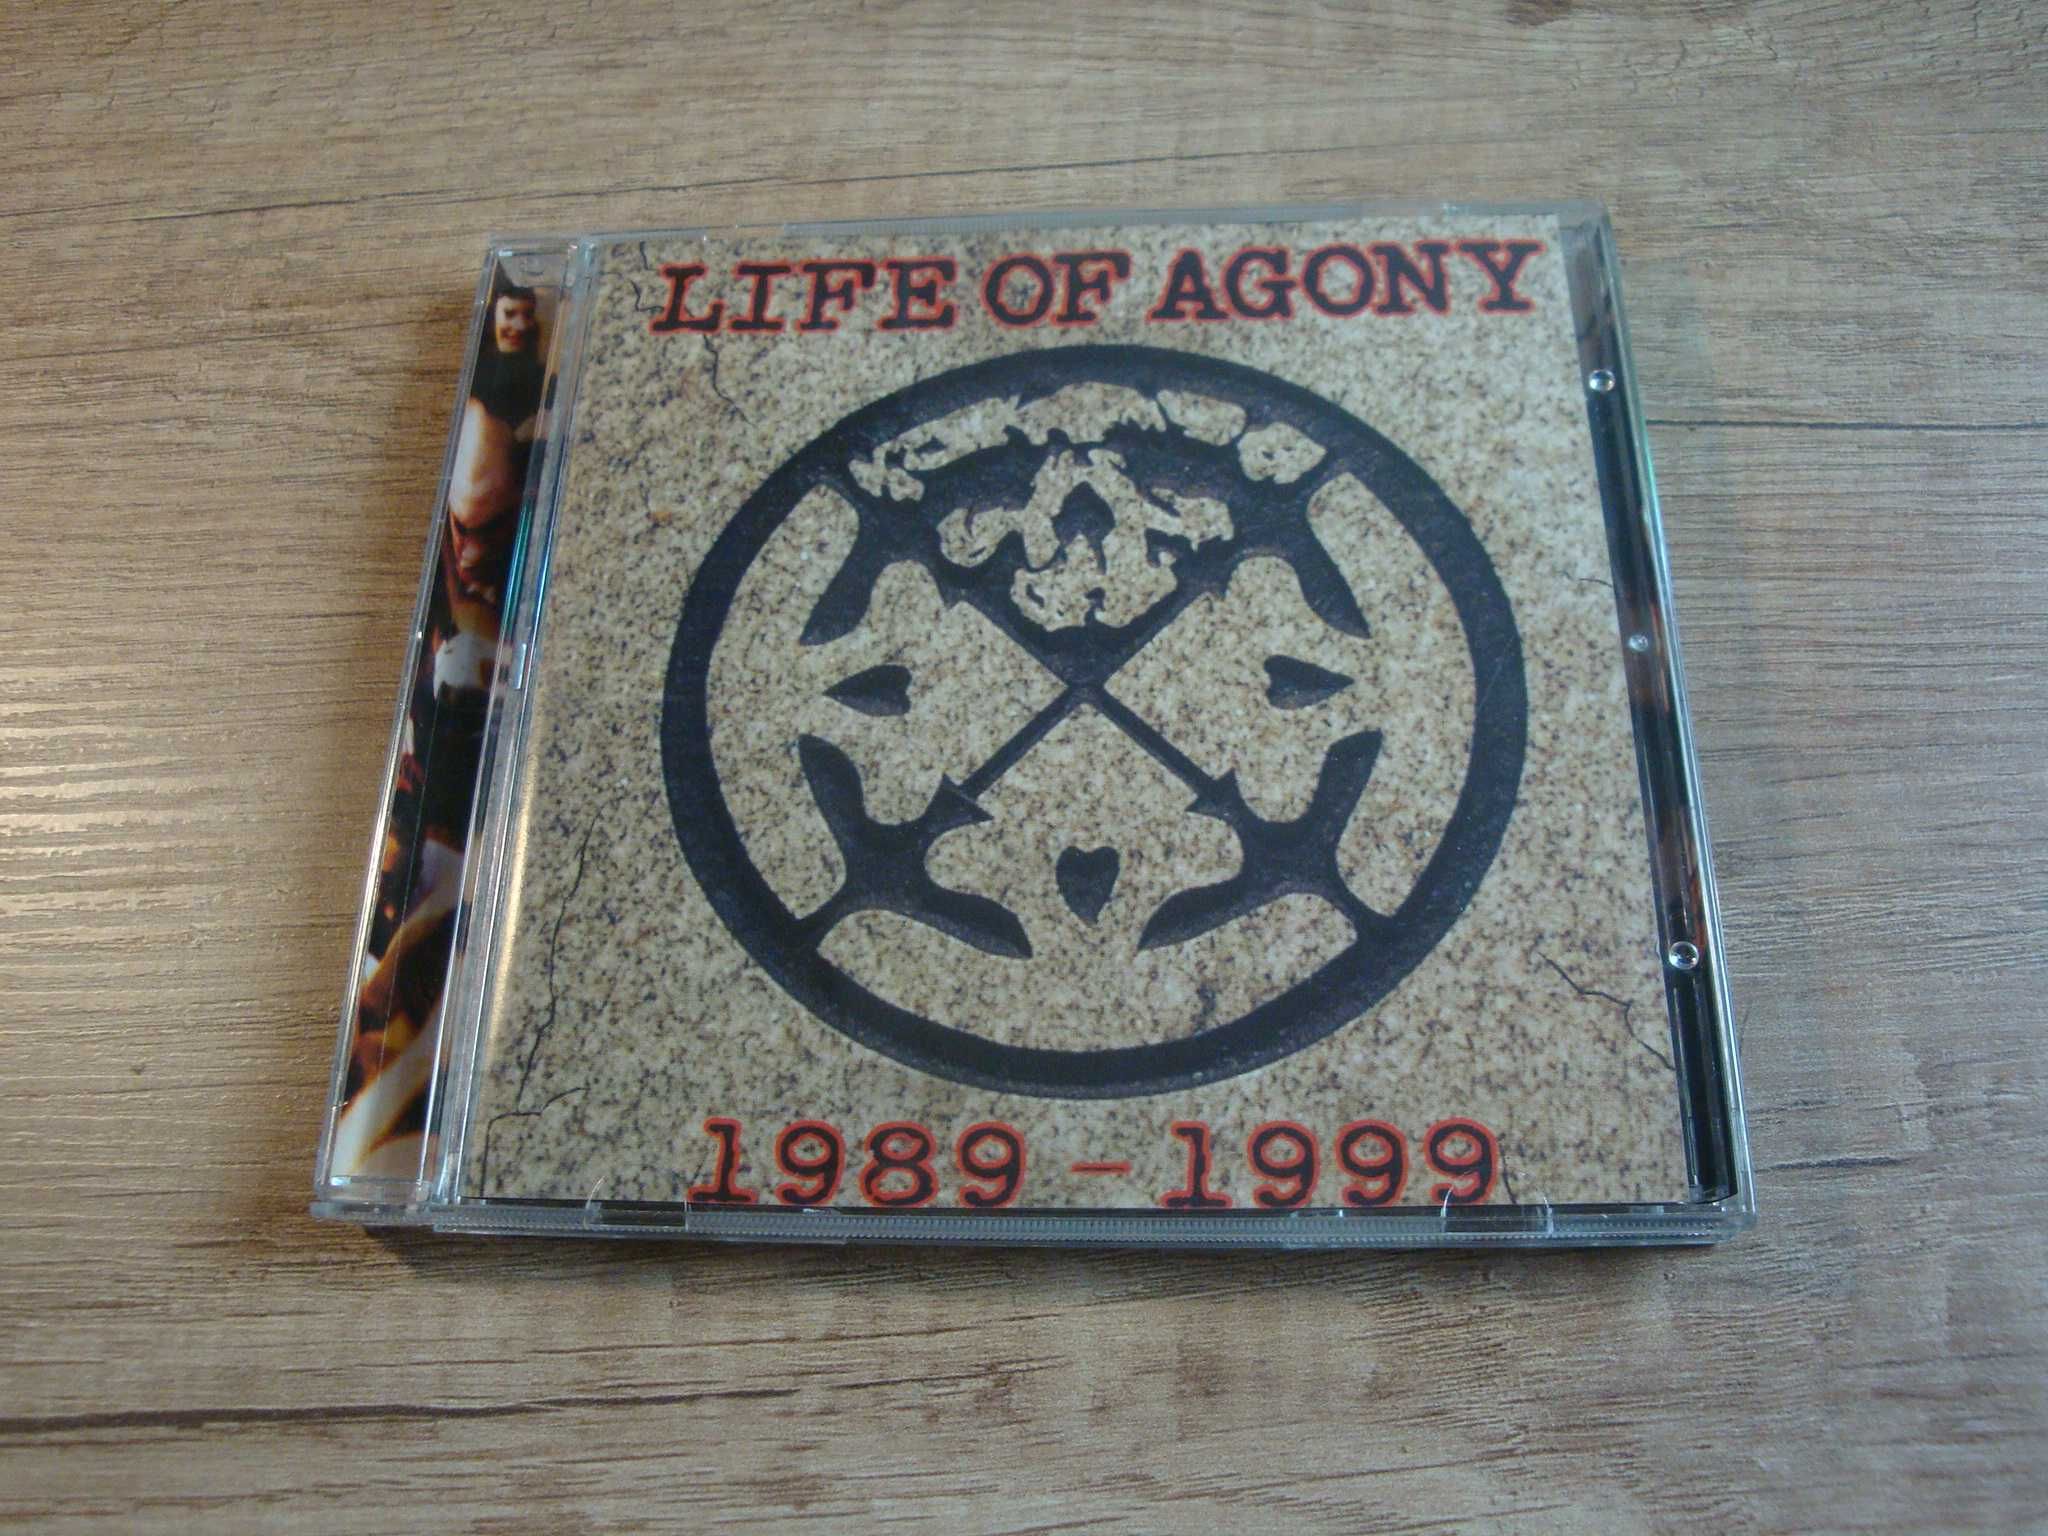 Life Of Agony - 1989 - 1999